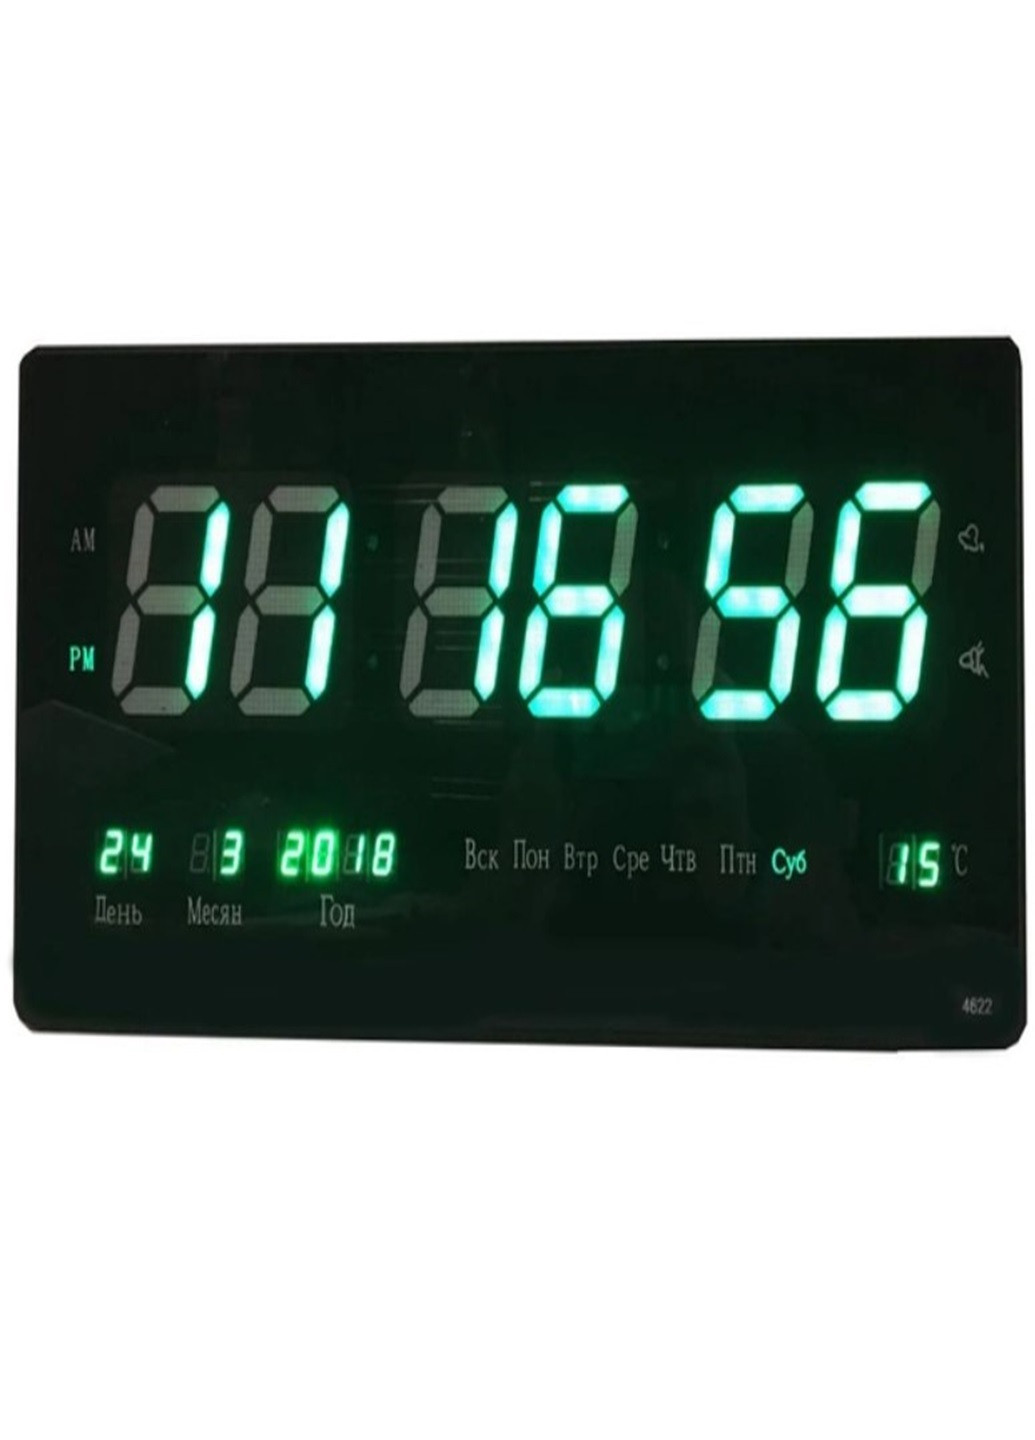 Настенные часы VST 4622/1237 электронные с будильником No Brand (276070516)